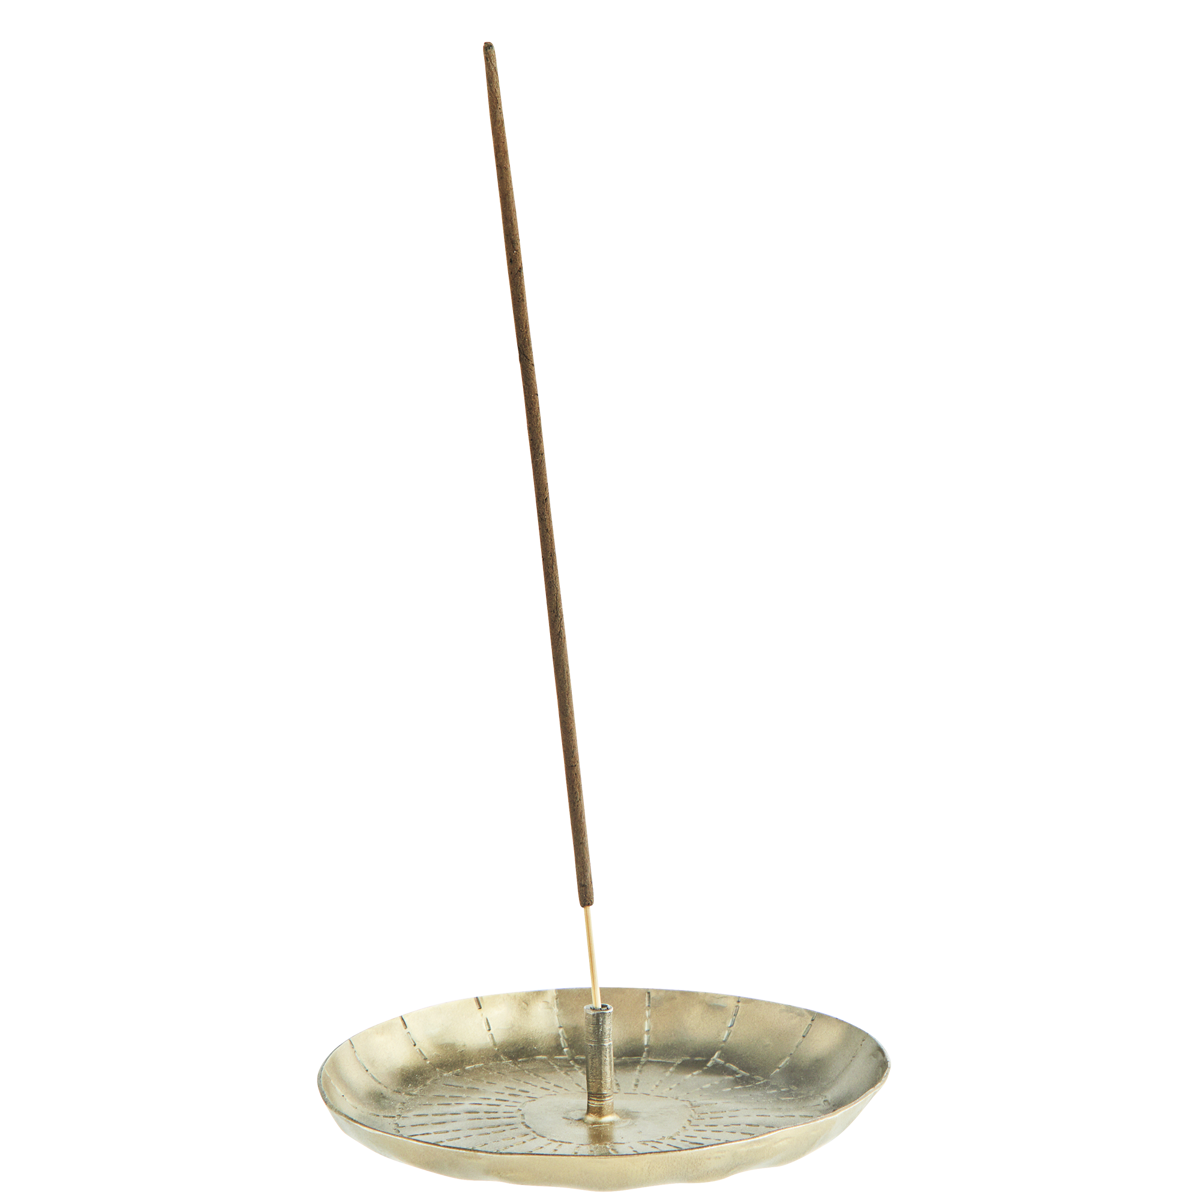 Iron incense holder